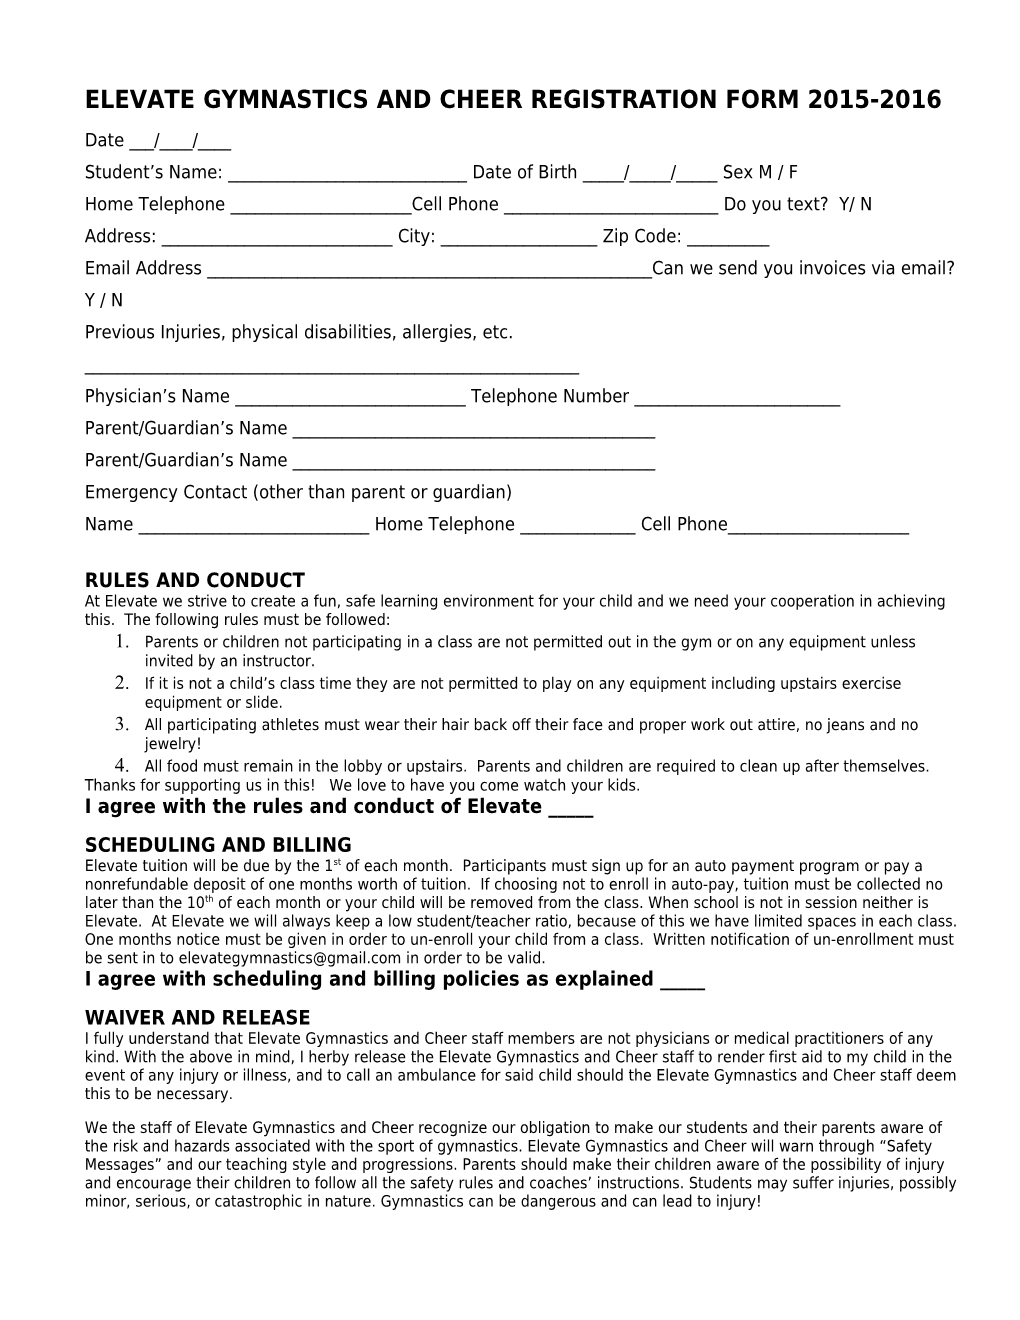 Elevate Gymnastics and Cheer Registration Form